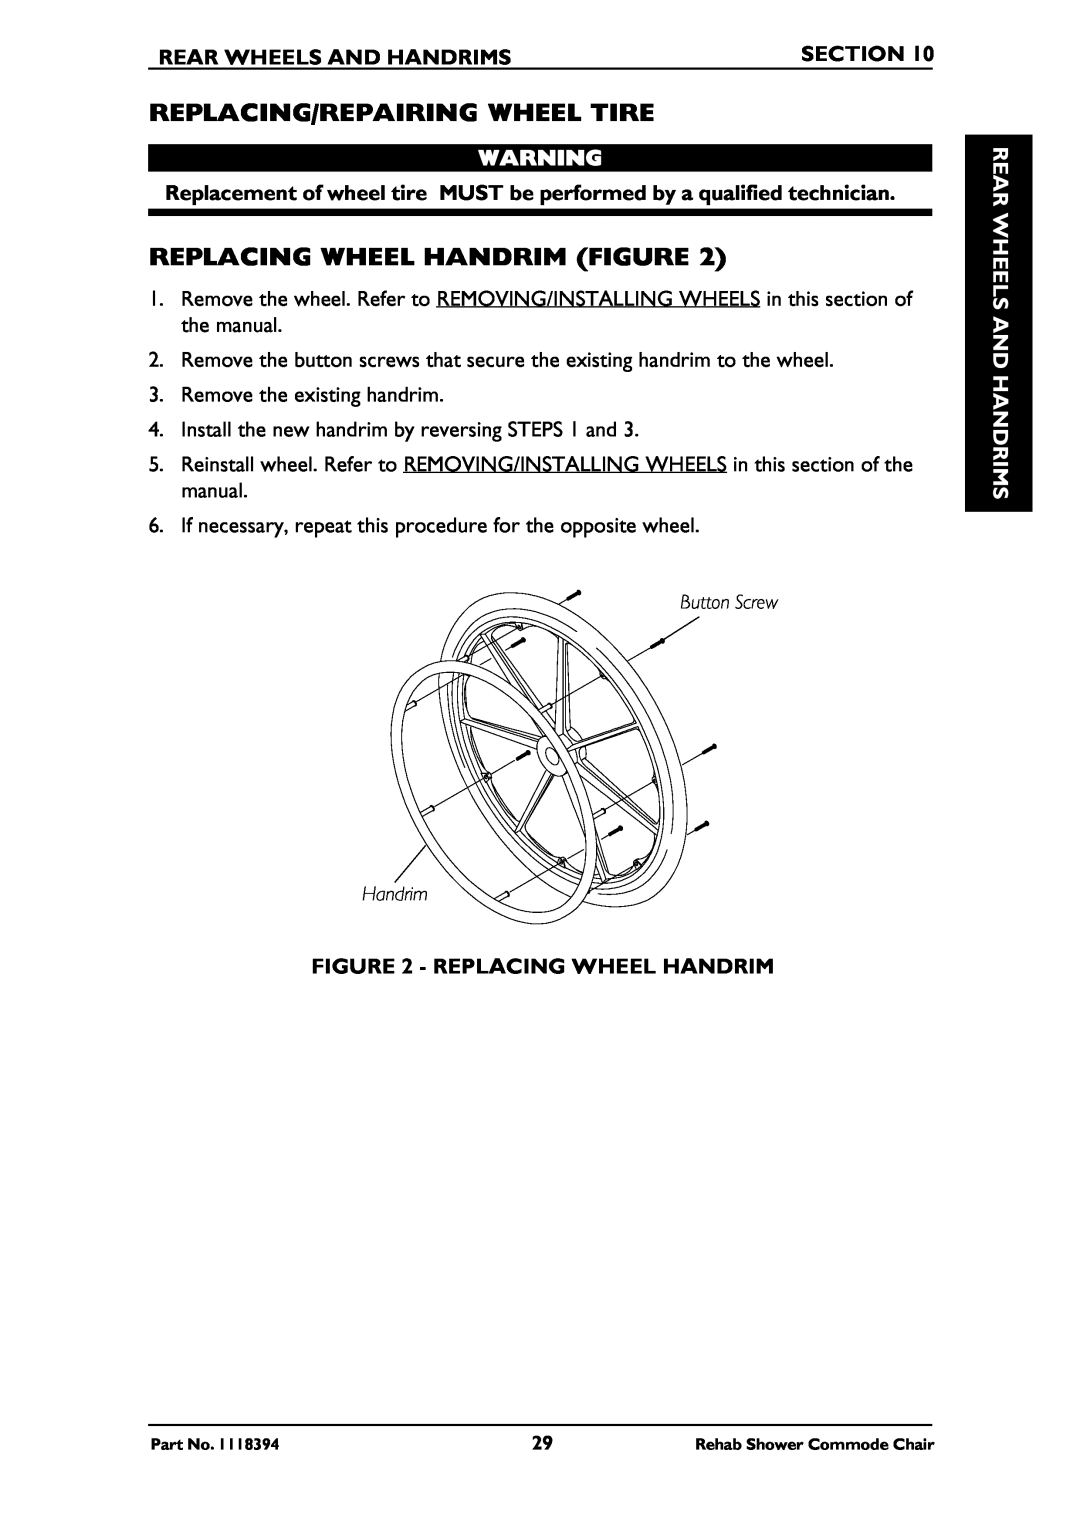 Invacare 6891, 6795, 6895 Replacing/Repairing Wheel Tire, Replacing Wheel Handrim Figure, Rear Wheels And Handrims, Section 